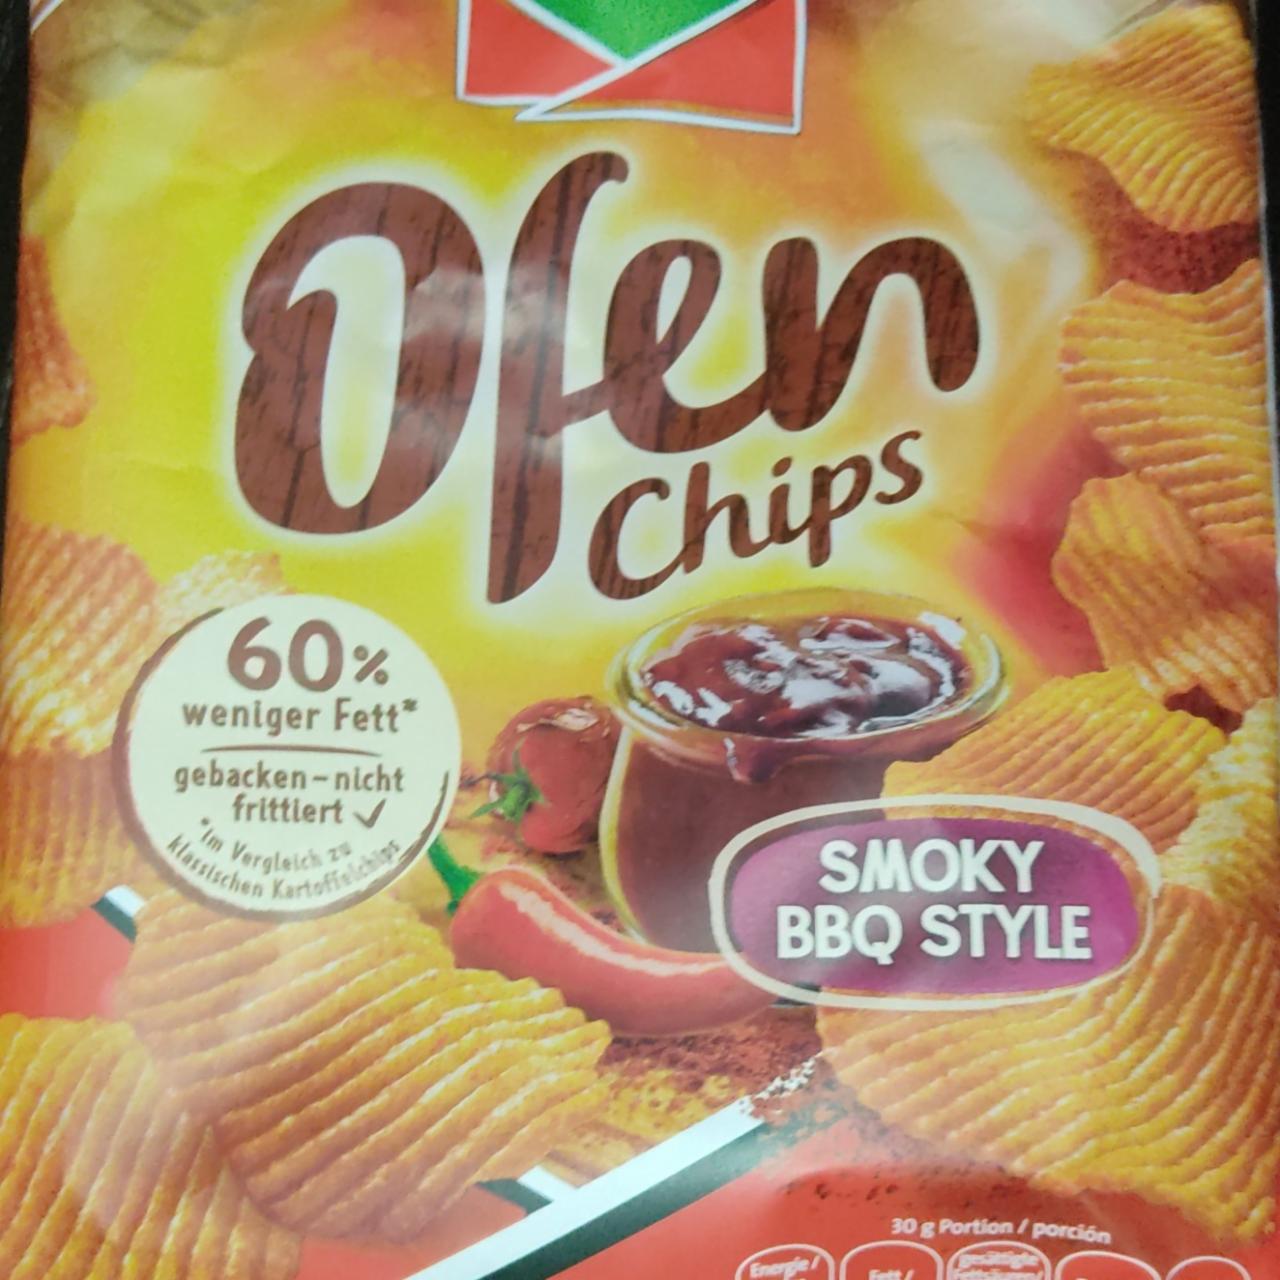 Fotografie - Ofen Chips Smoky BBQ Style funny-frisch